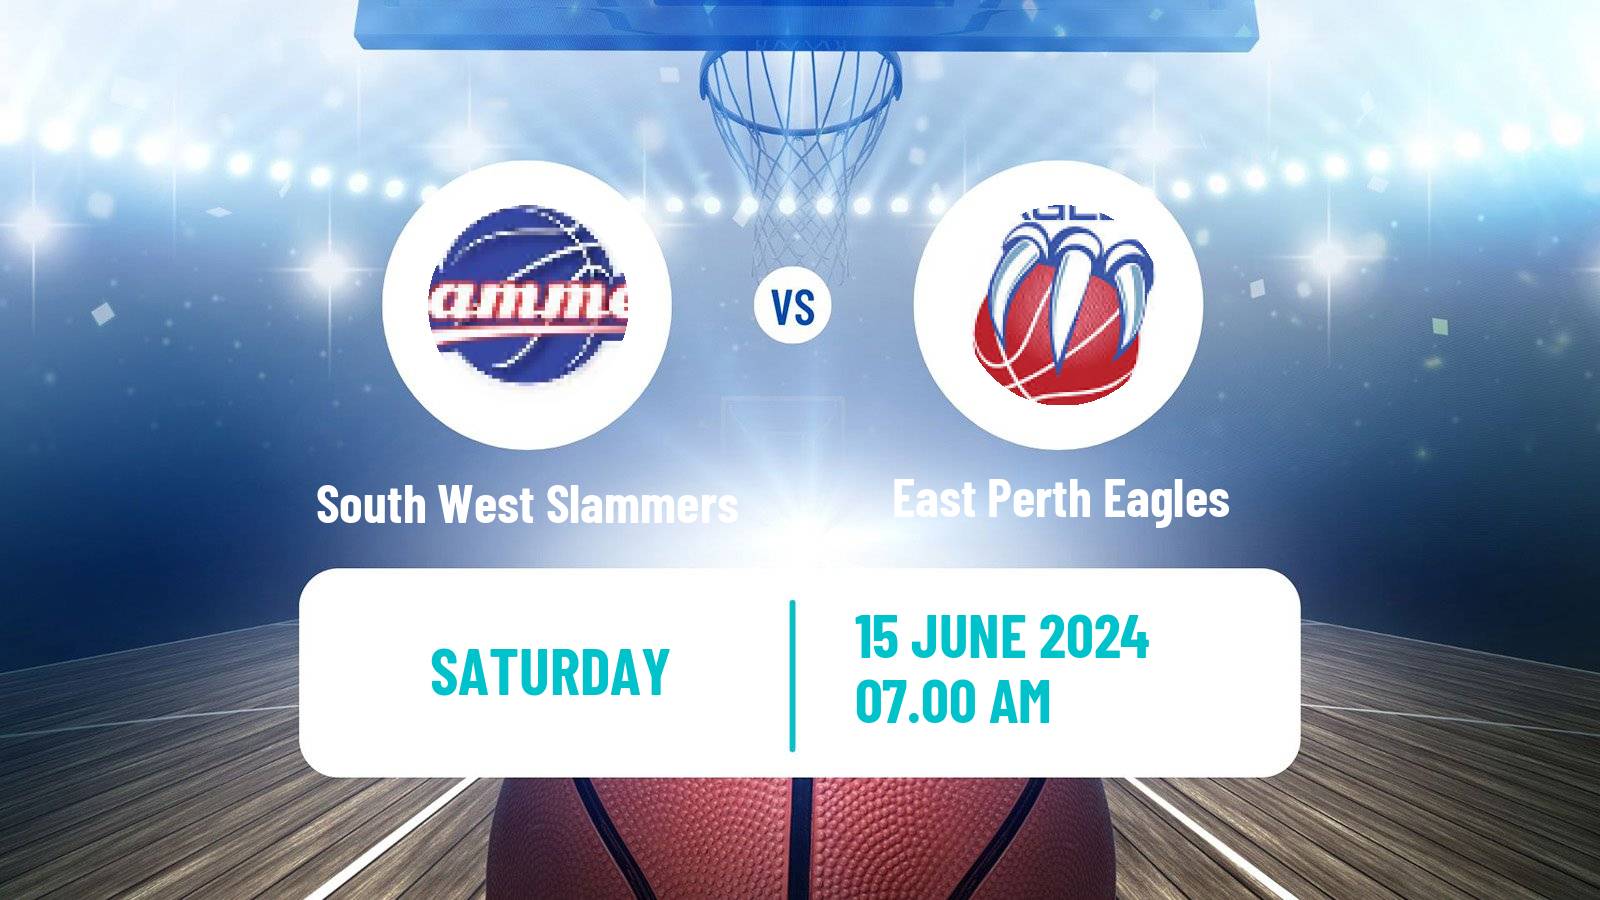 Basketball Australian NBL1 West South West Slammers - East Perth Eagles